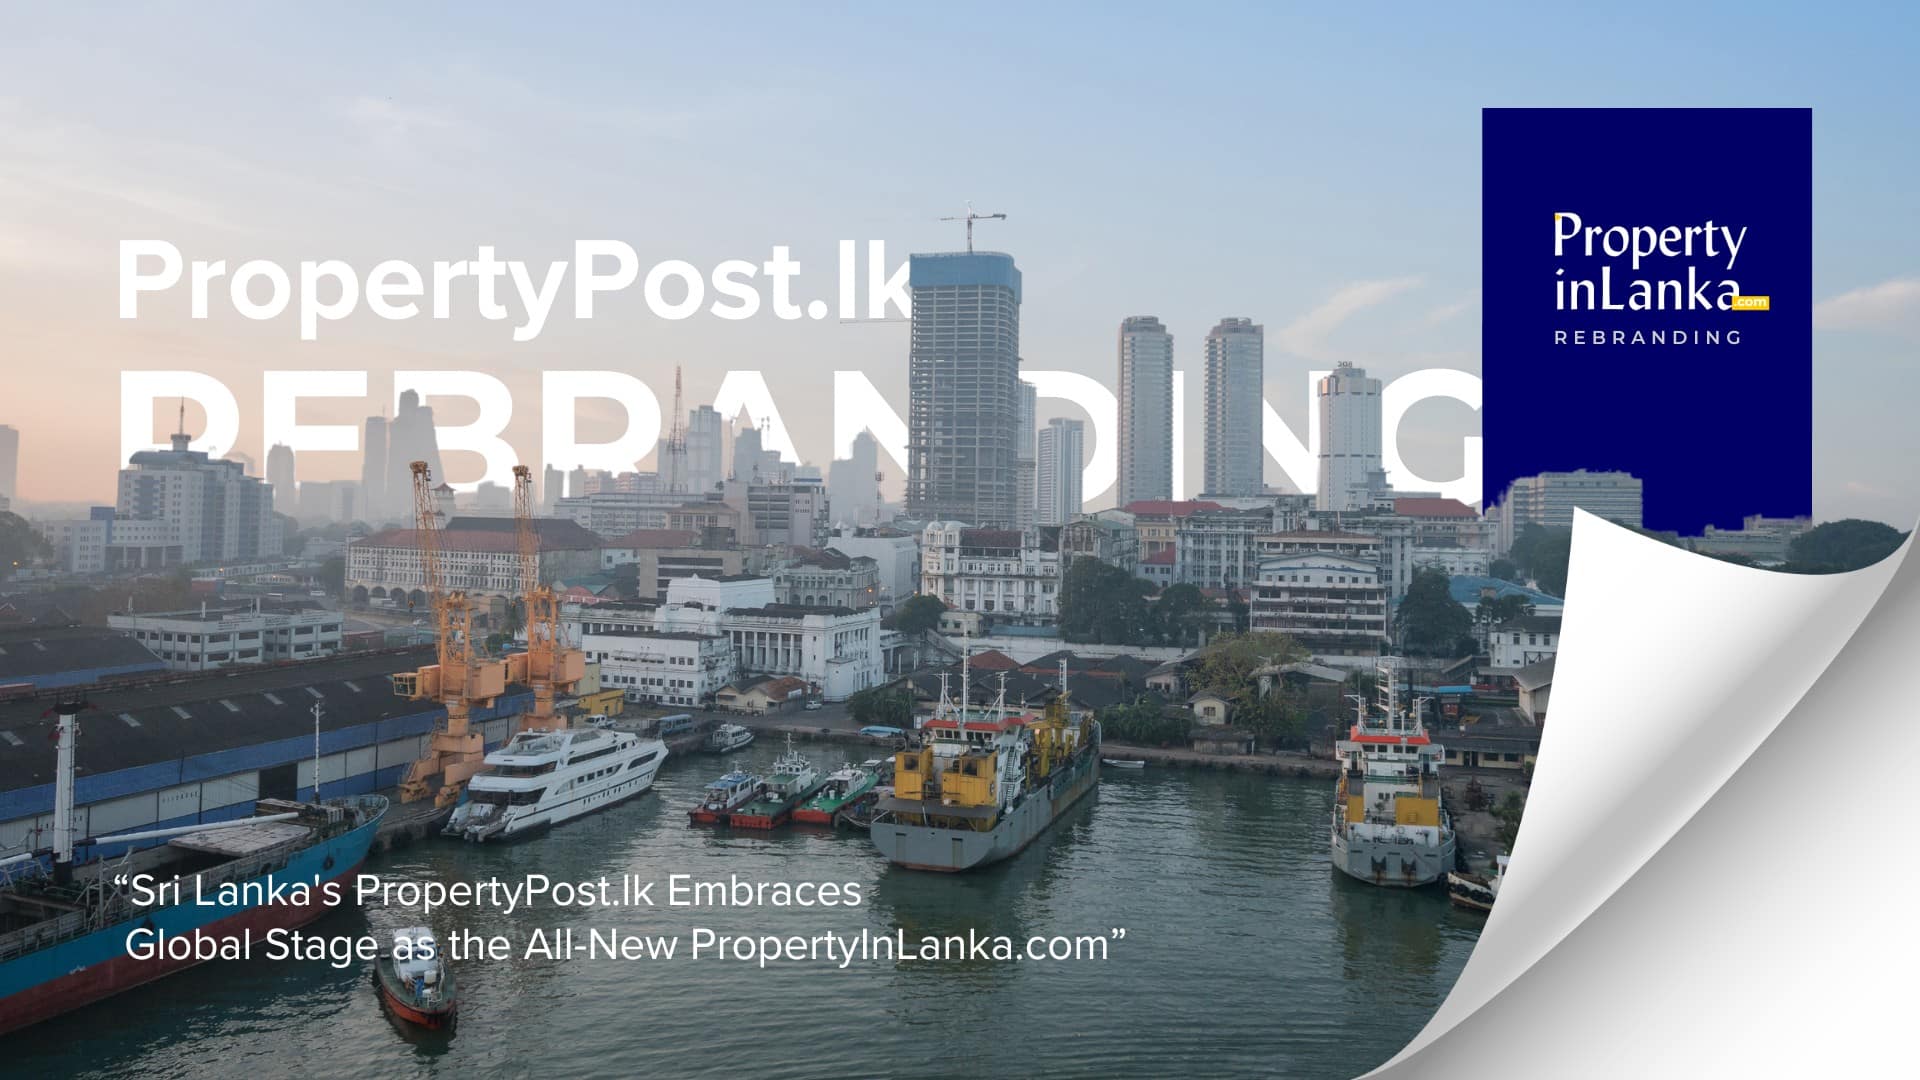 PropertyPost.lk Embraces Global Stage As PropertyInLanka.com